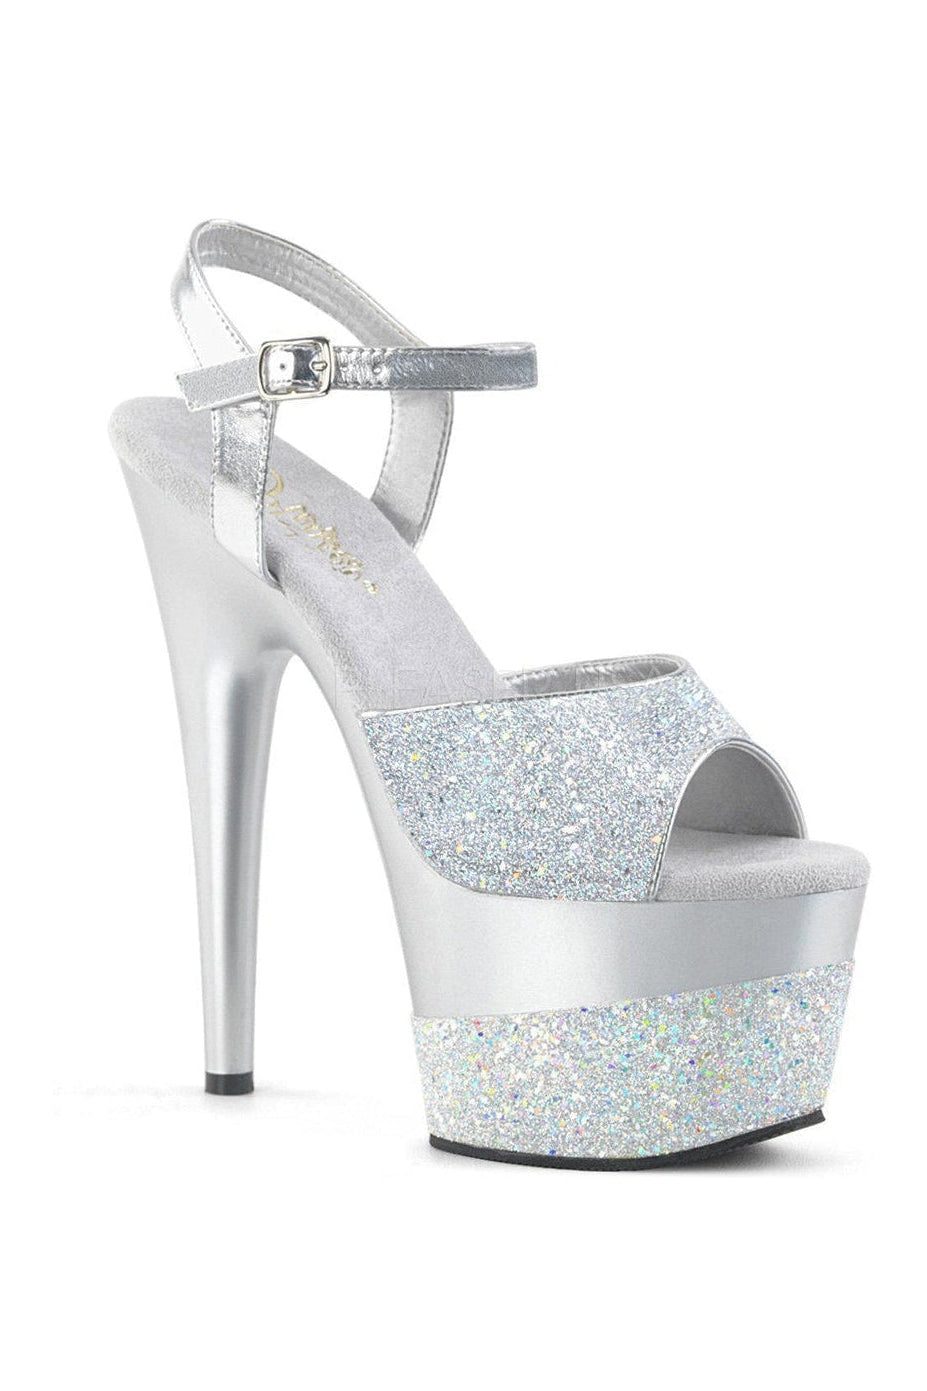 Pleaser Silver Sandals Platform Stripper Shoes | Buy at Sexyshoes.com